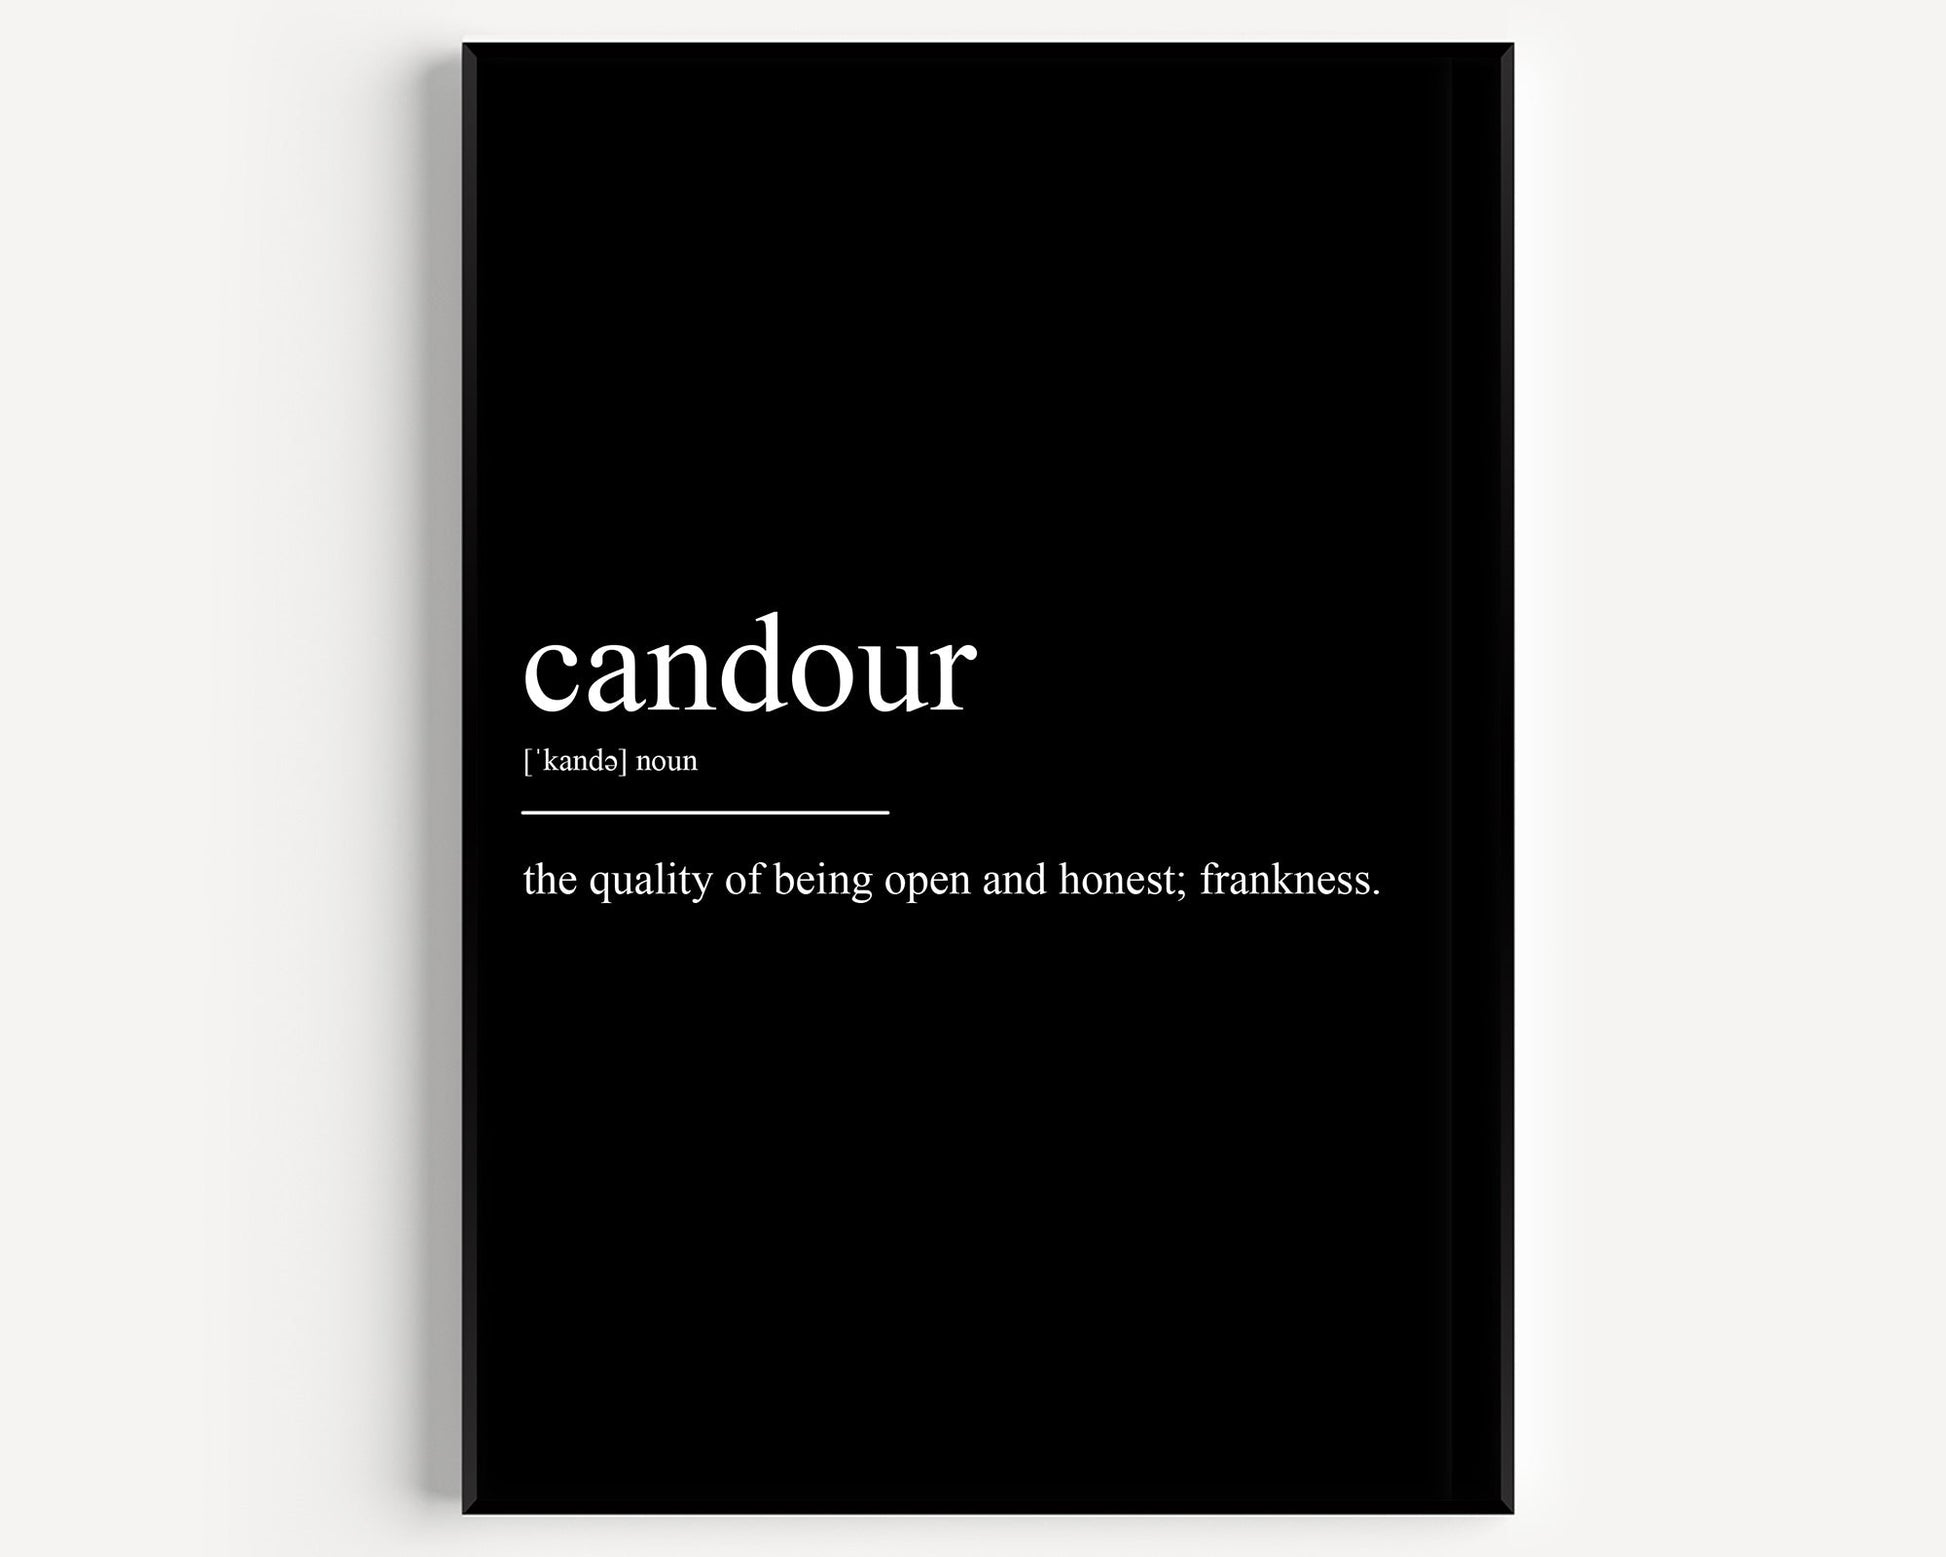 Candour Definition Print - Magic Posters